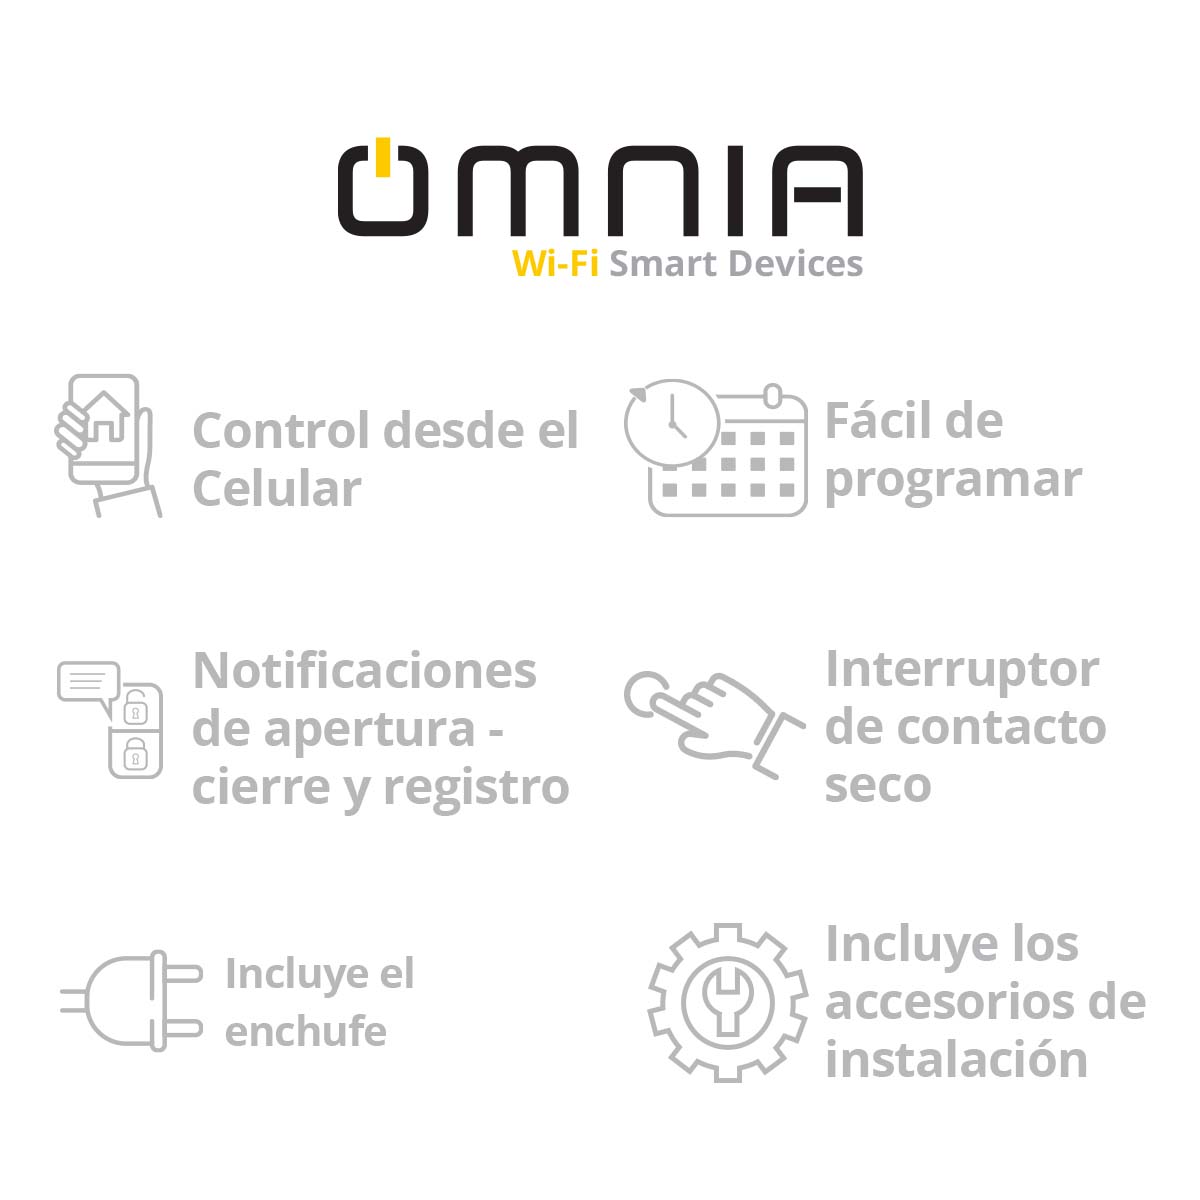 Controlador de puerta de garaje inteligente WiFi (Kit Completo). Omnia